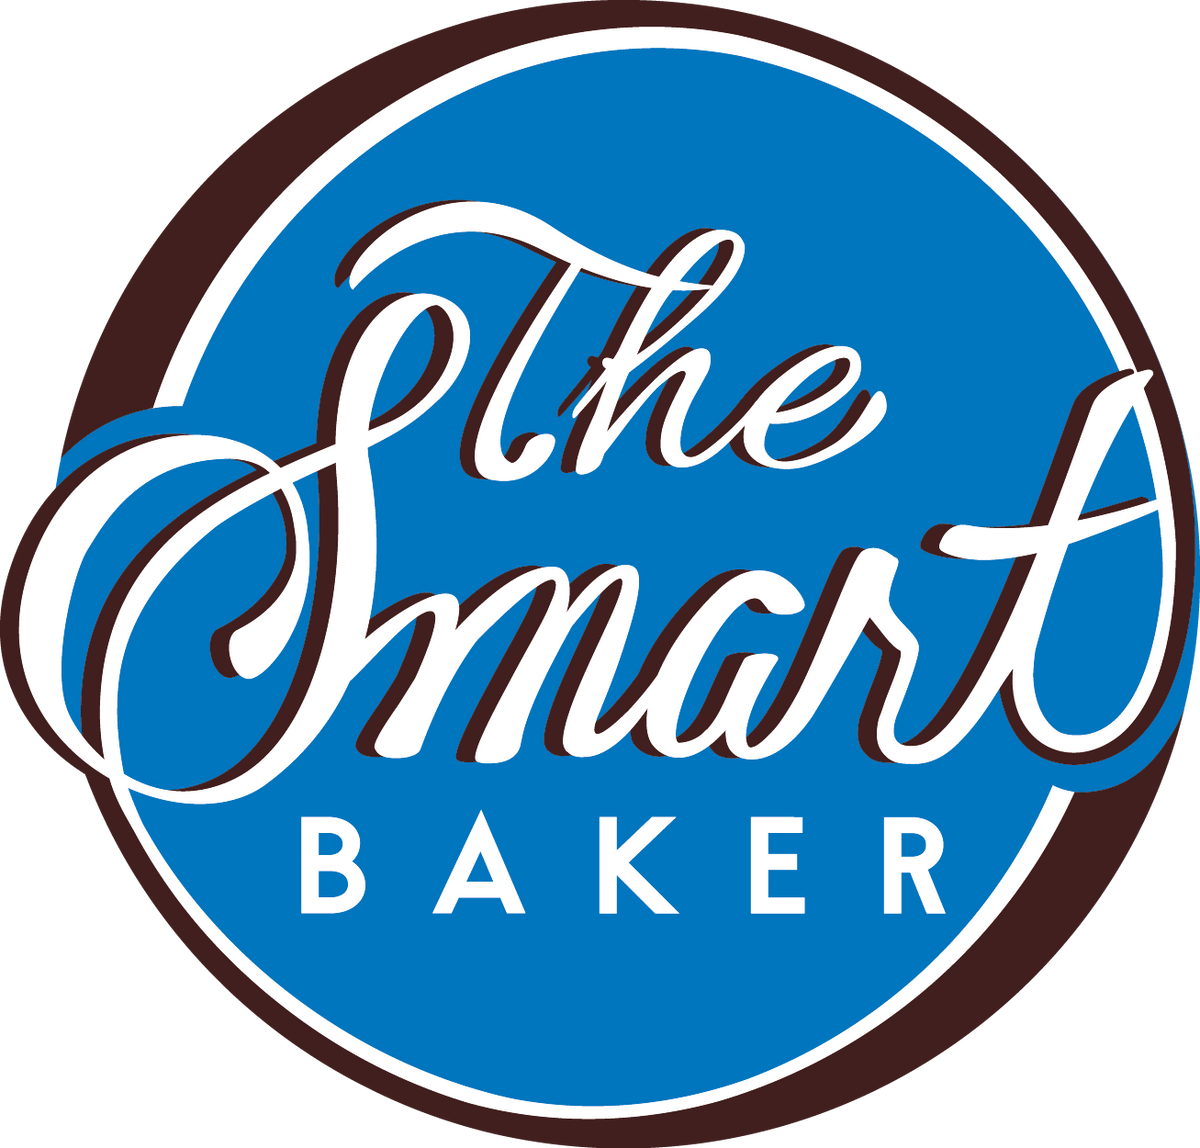 Baker'Smart Bakery Equipment shop